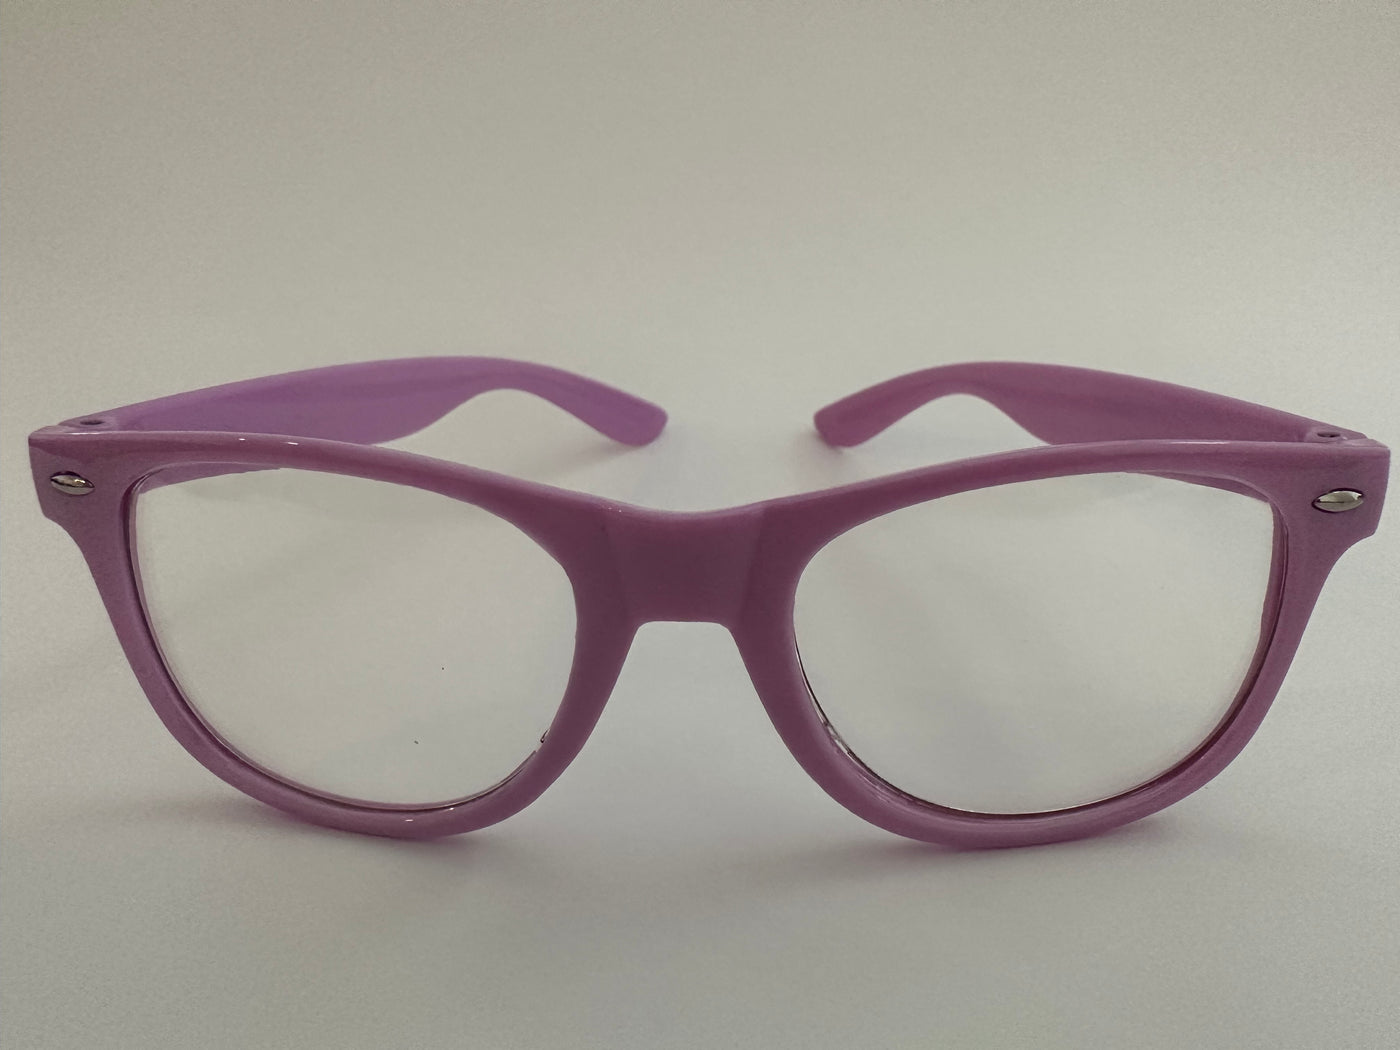 AetherX Visor Sunglasses